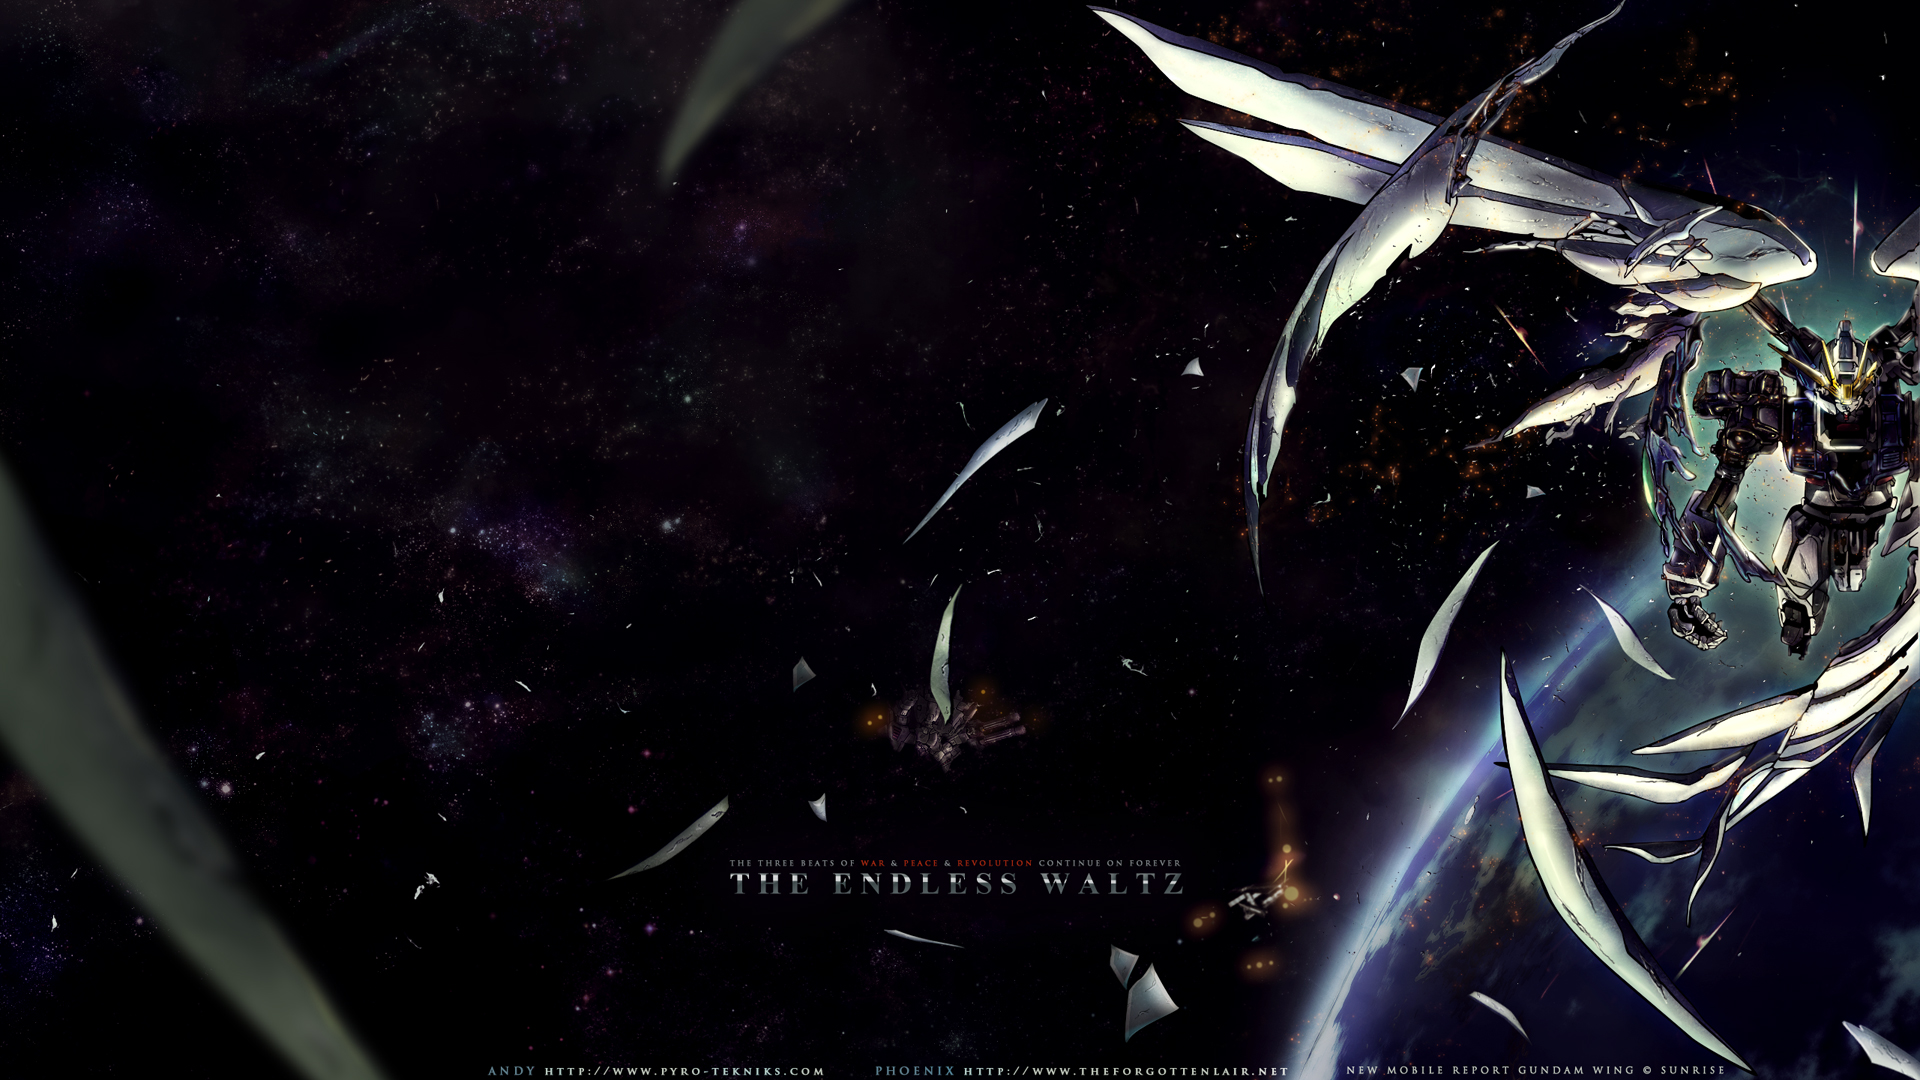 Download mobile wallpaper Anime, Gundam for free.